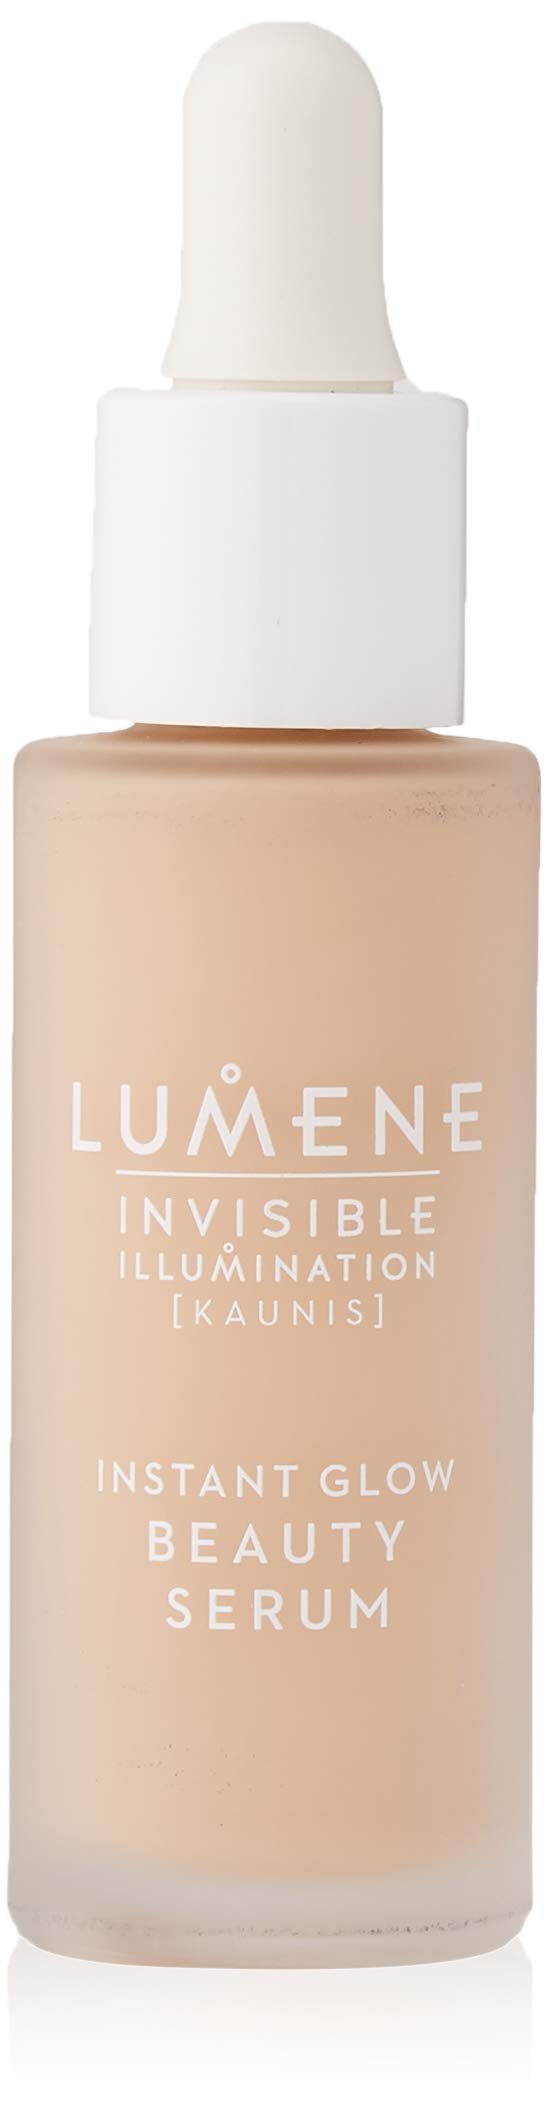 Lumene Invisible Illumination Instant Glow Beauty Serum 30ml